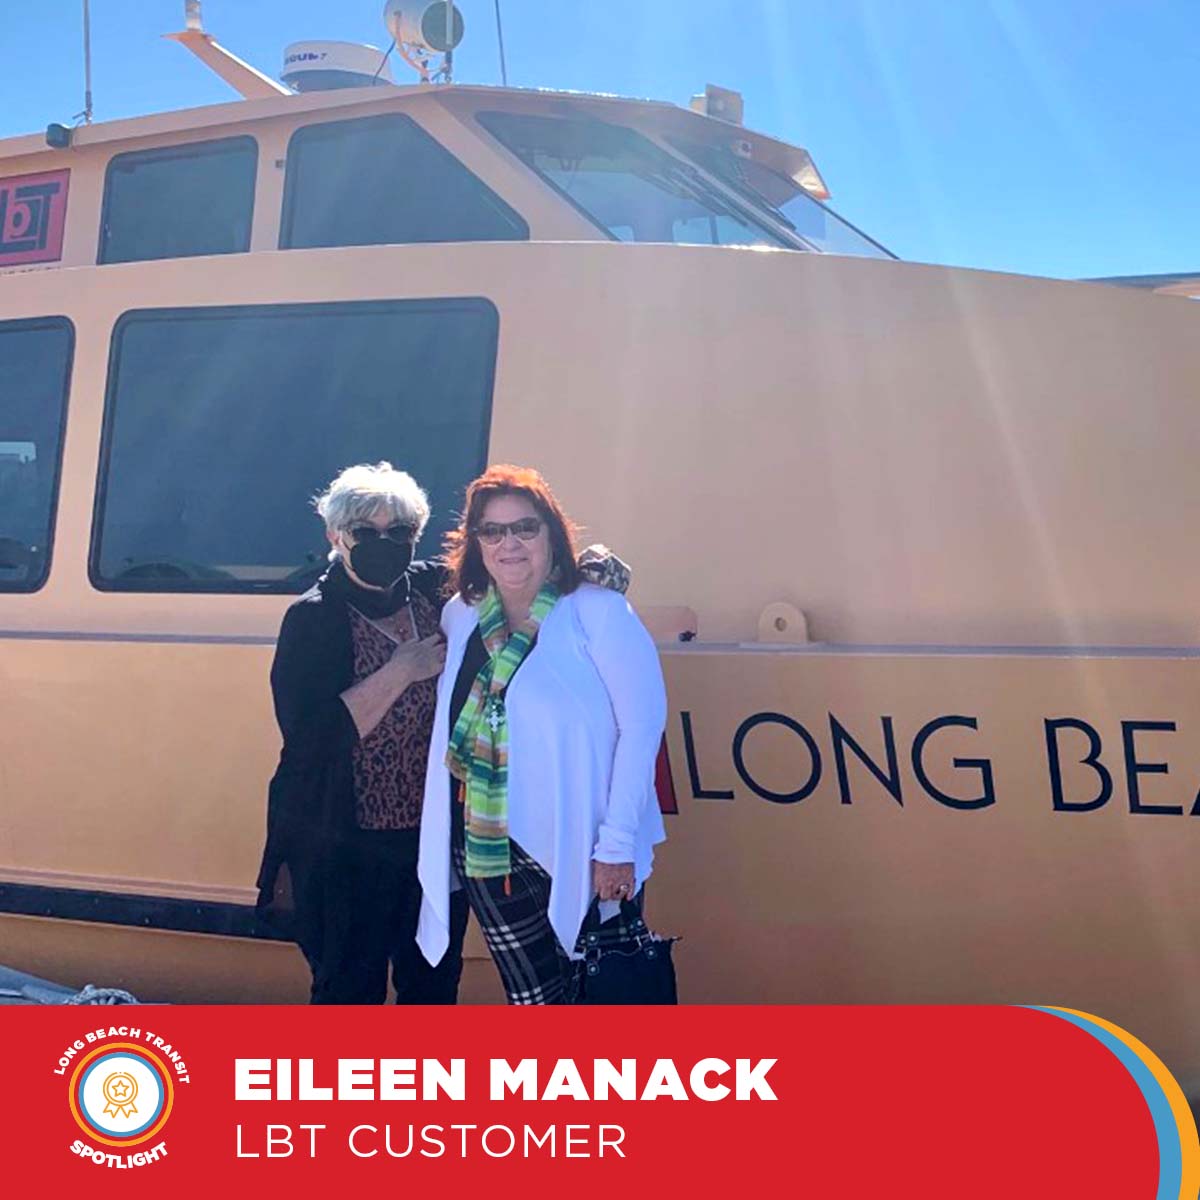 El cliente de Long Beach Transit destaca a Eileen Manack